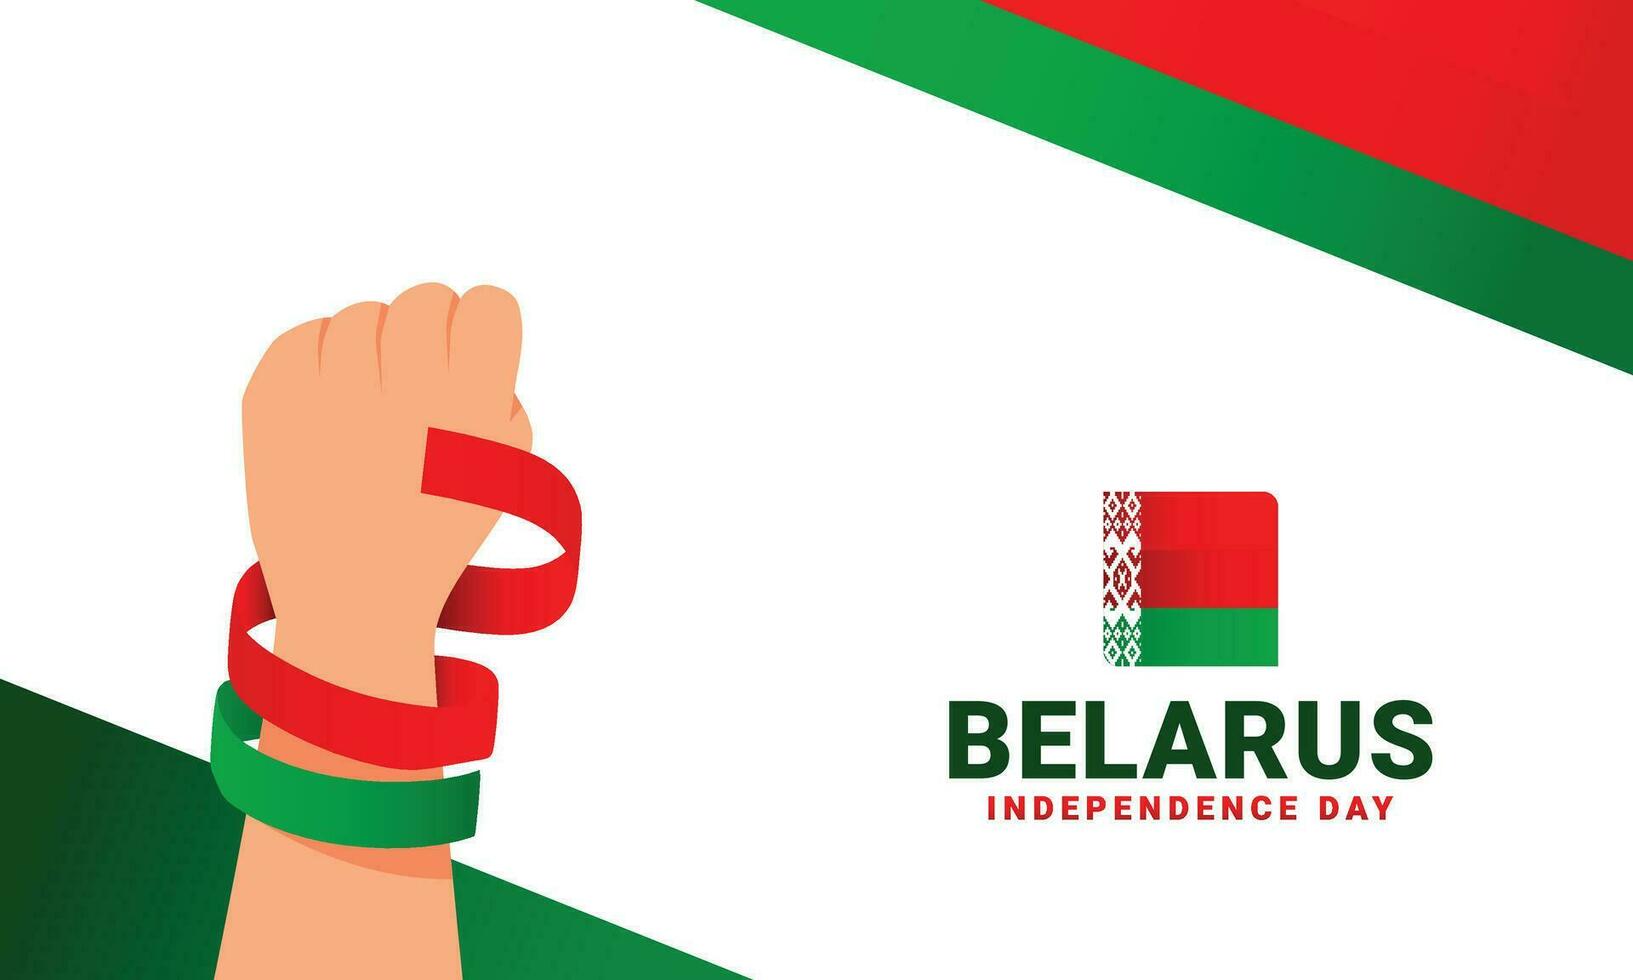 Belarus Independence day event celebrate vector